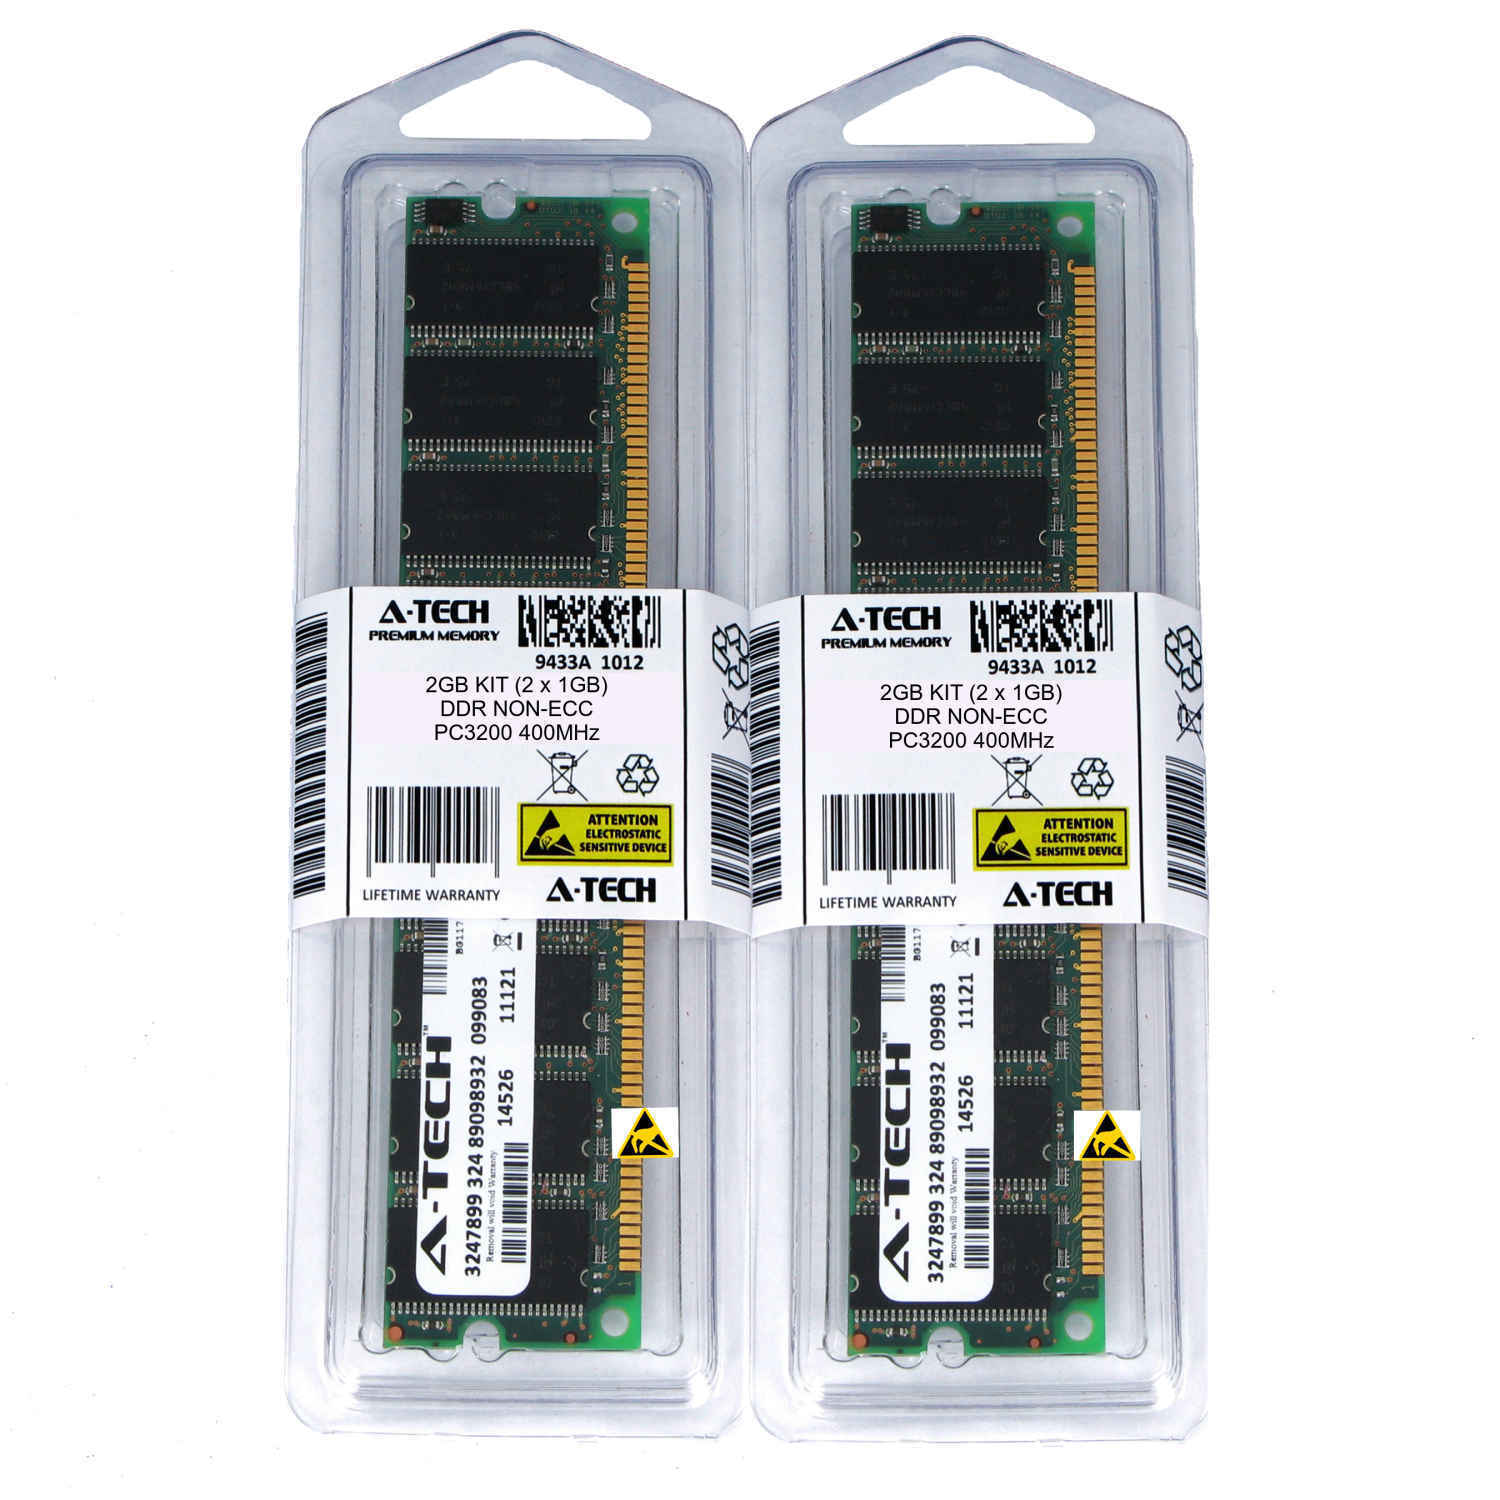 2GB KIT 2 x 1GB DIMM DDR NON-ECC PC3200 400MHz 400 MHz DDR-1 DDR1 2G Ram Memory